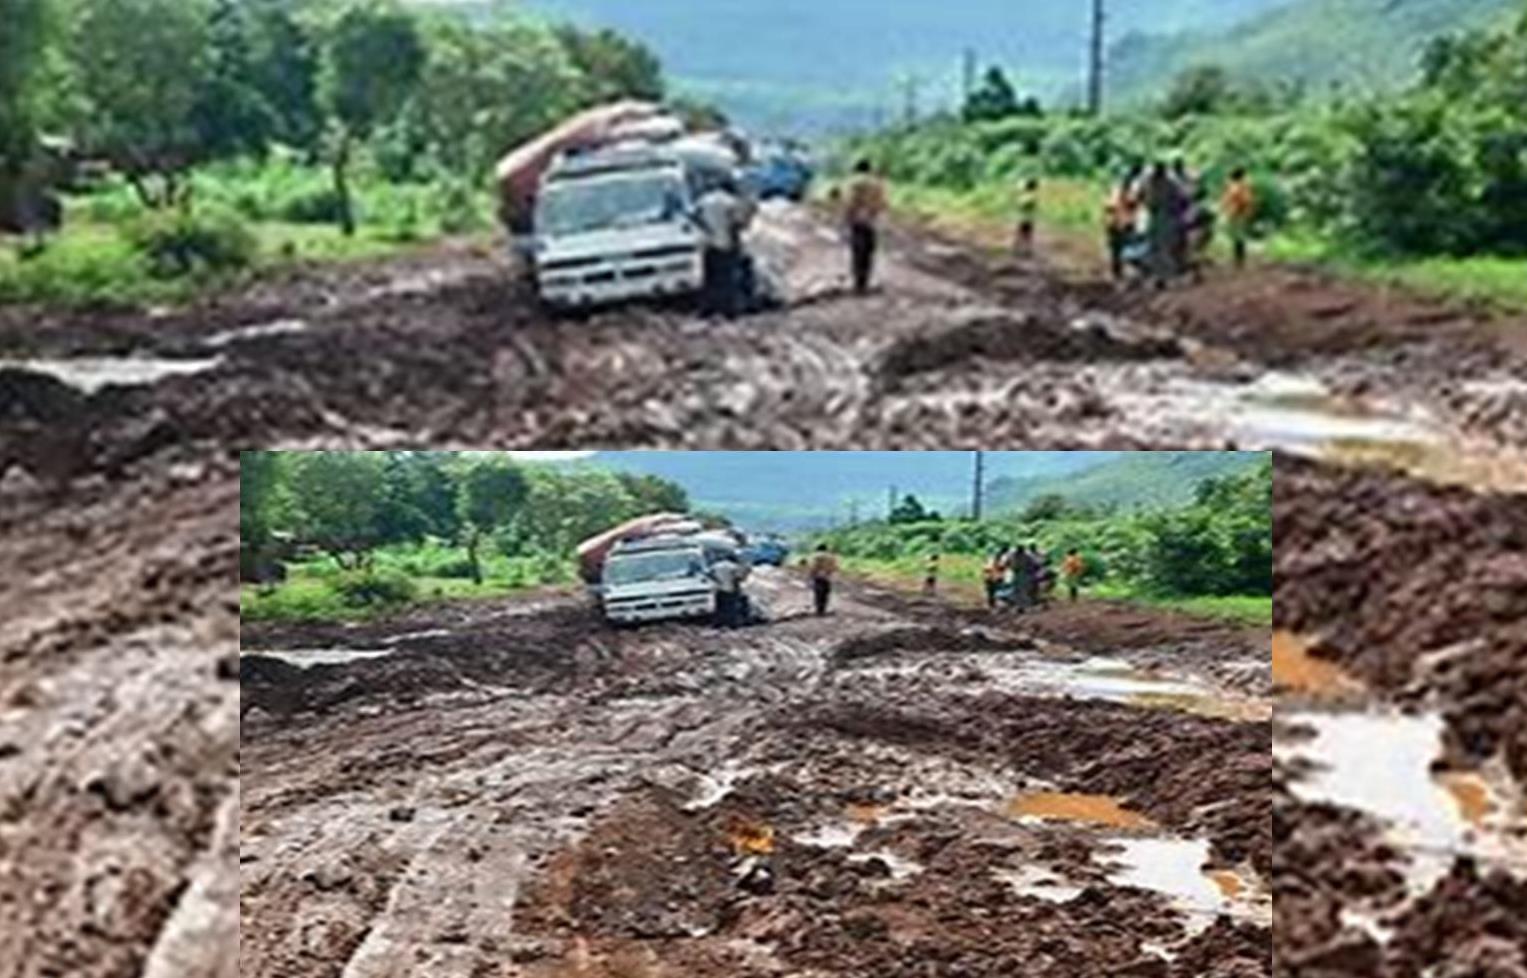 Messima Road in Deplorable Condition